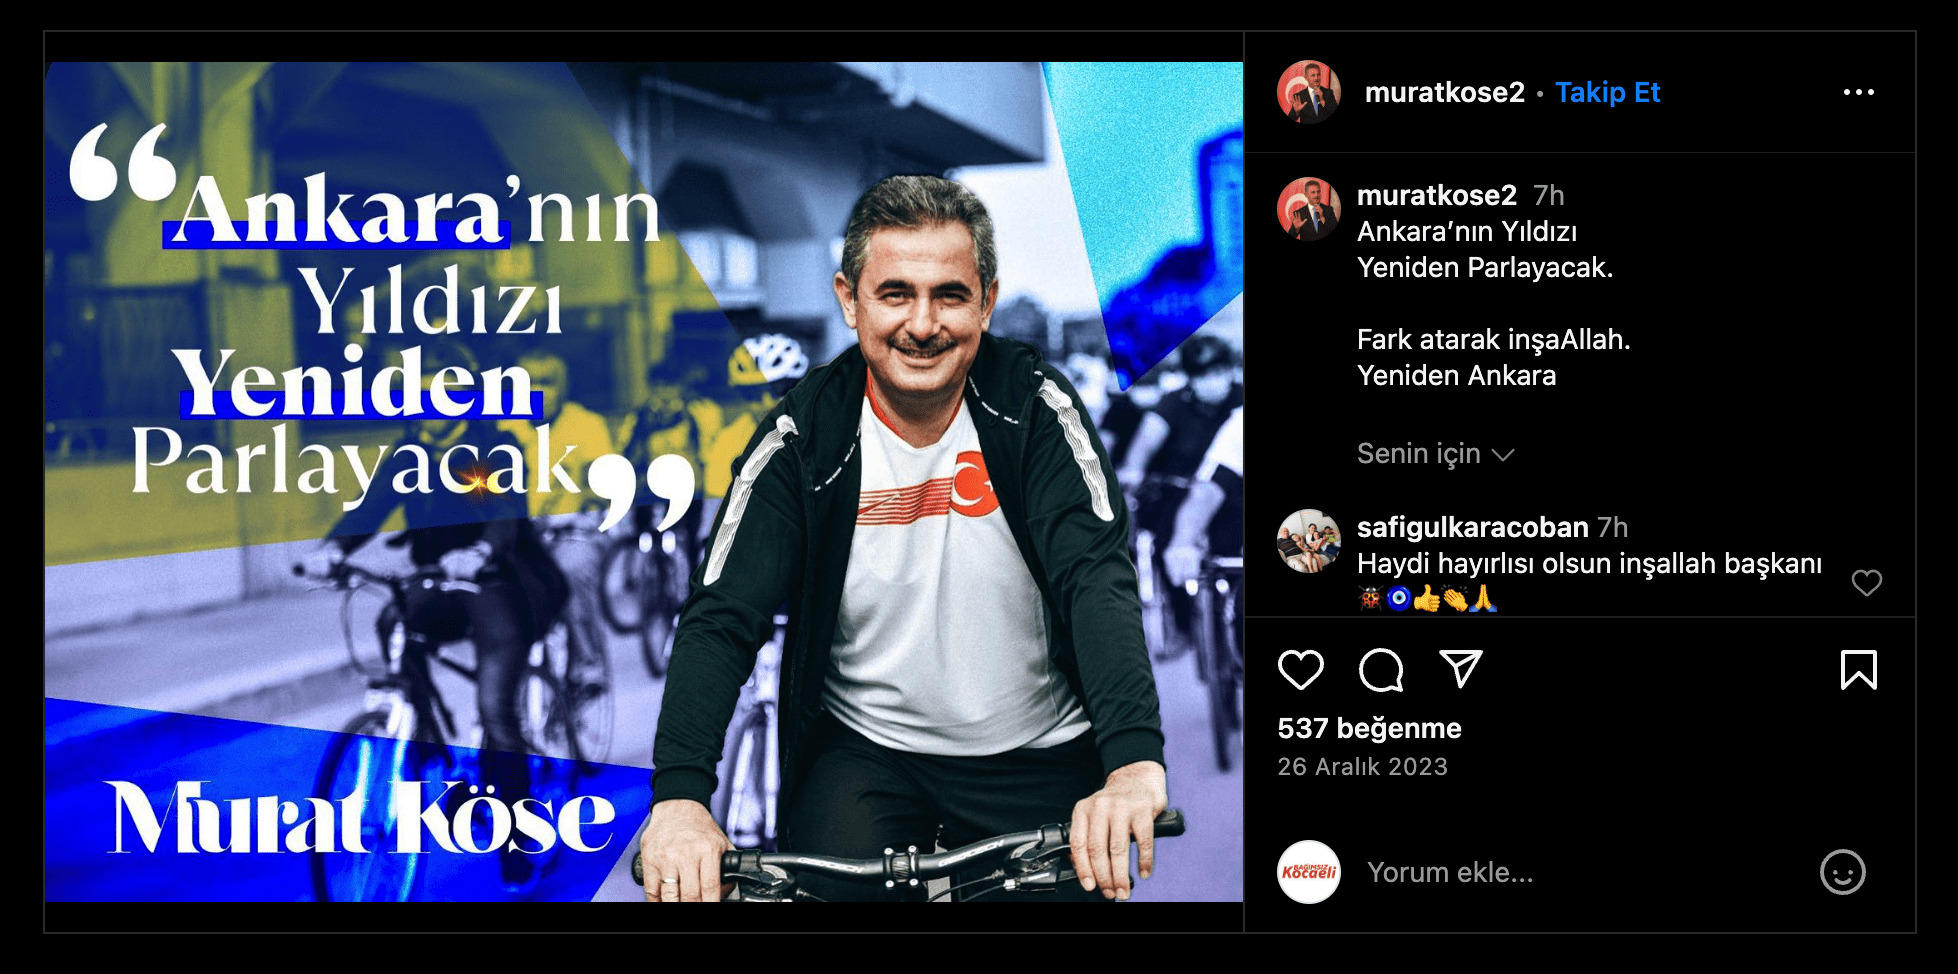 Murat Kose secim slogani